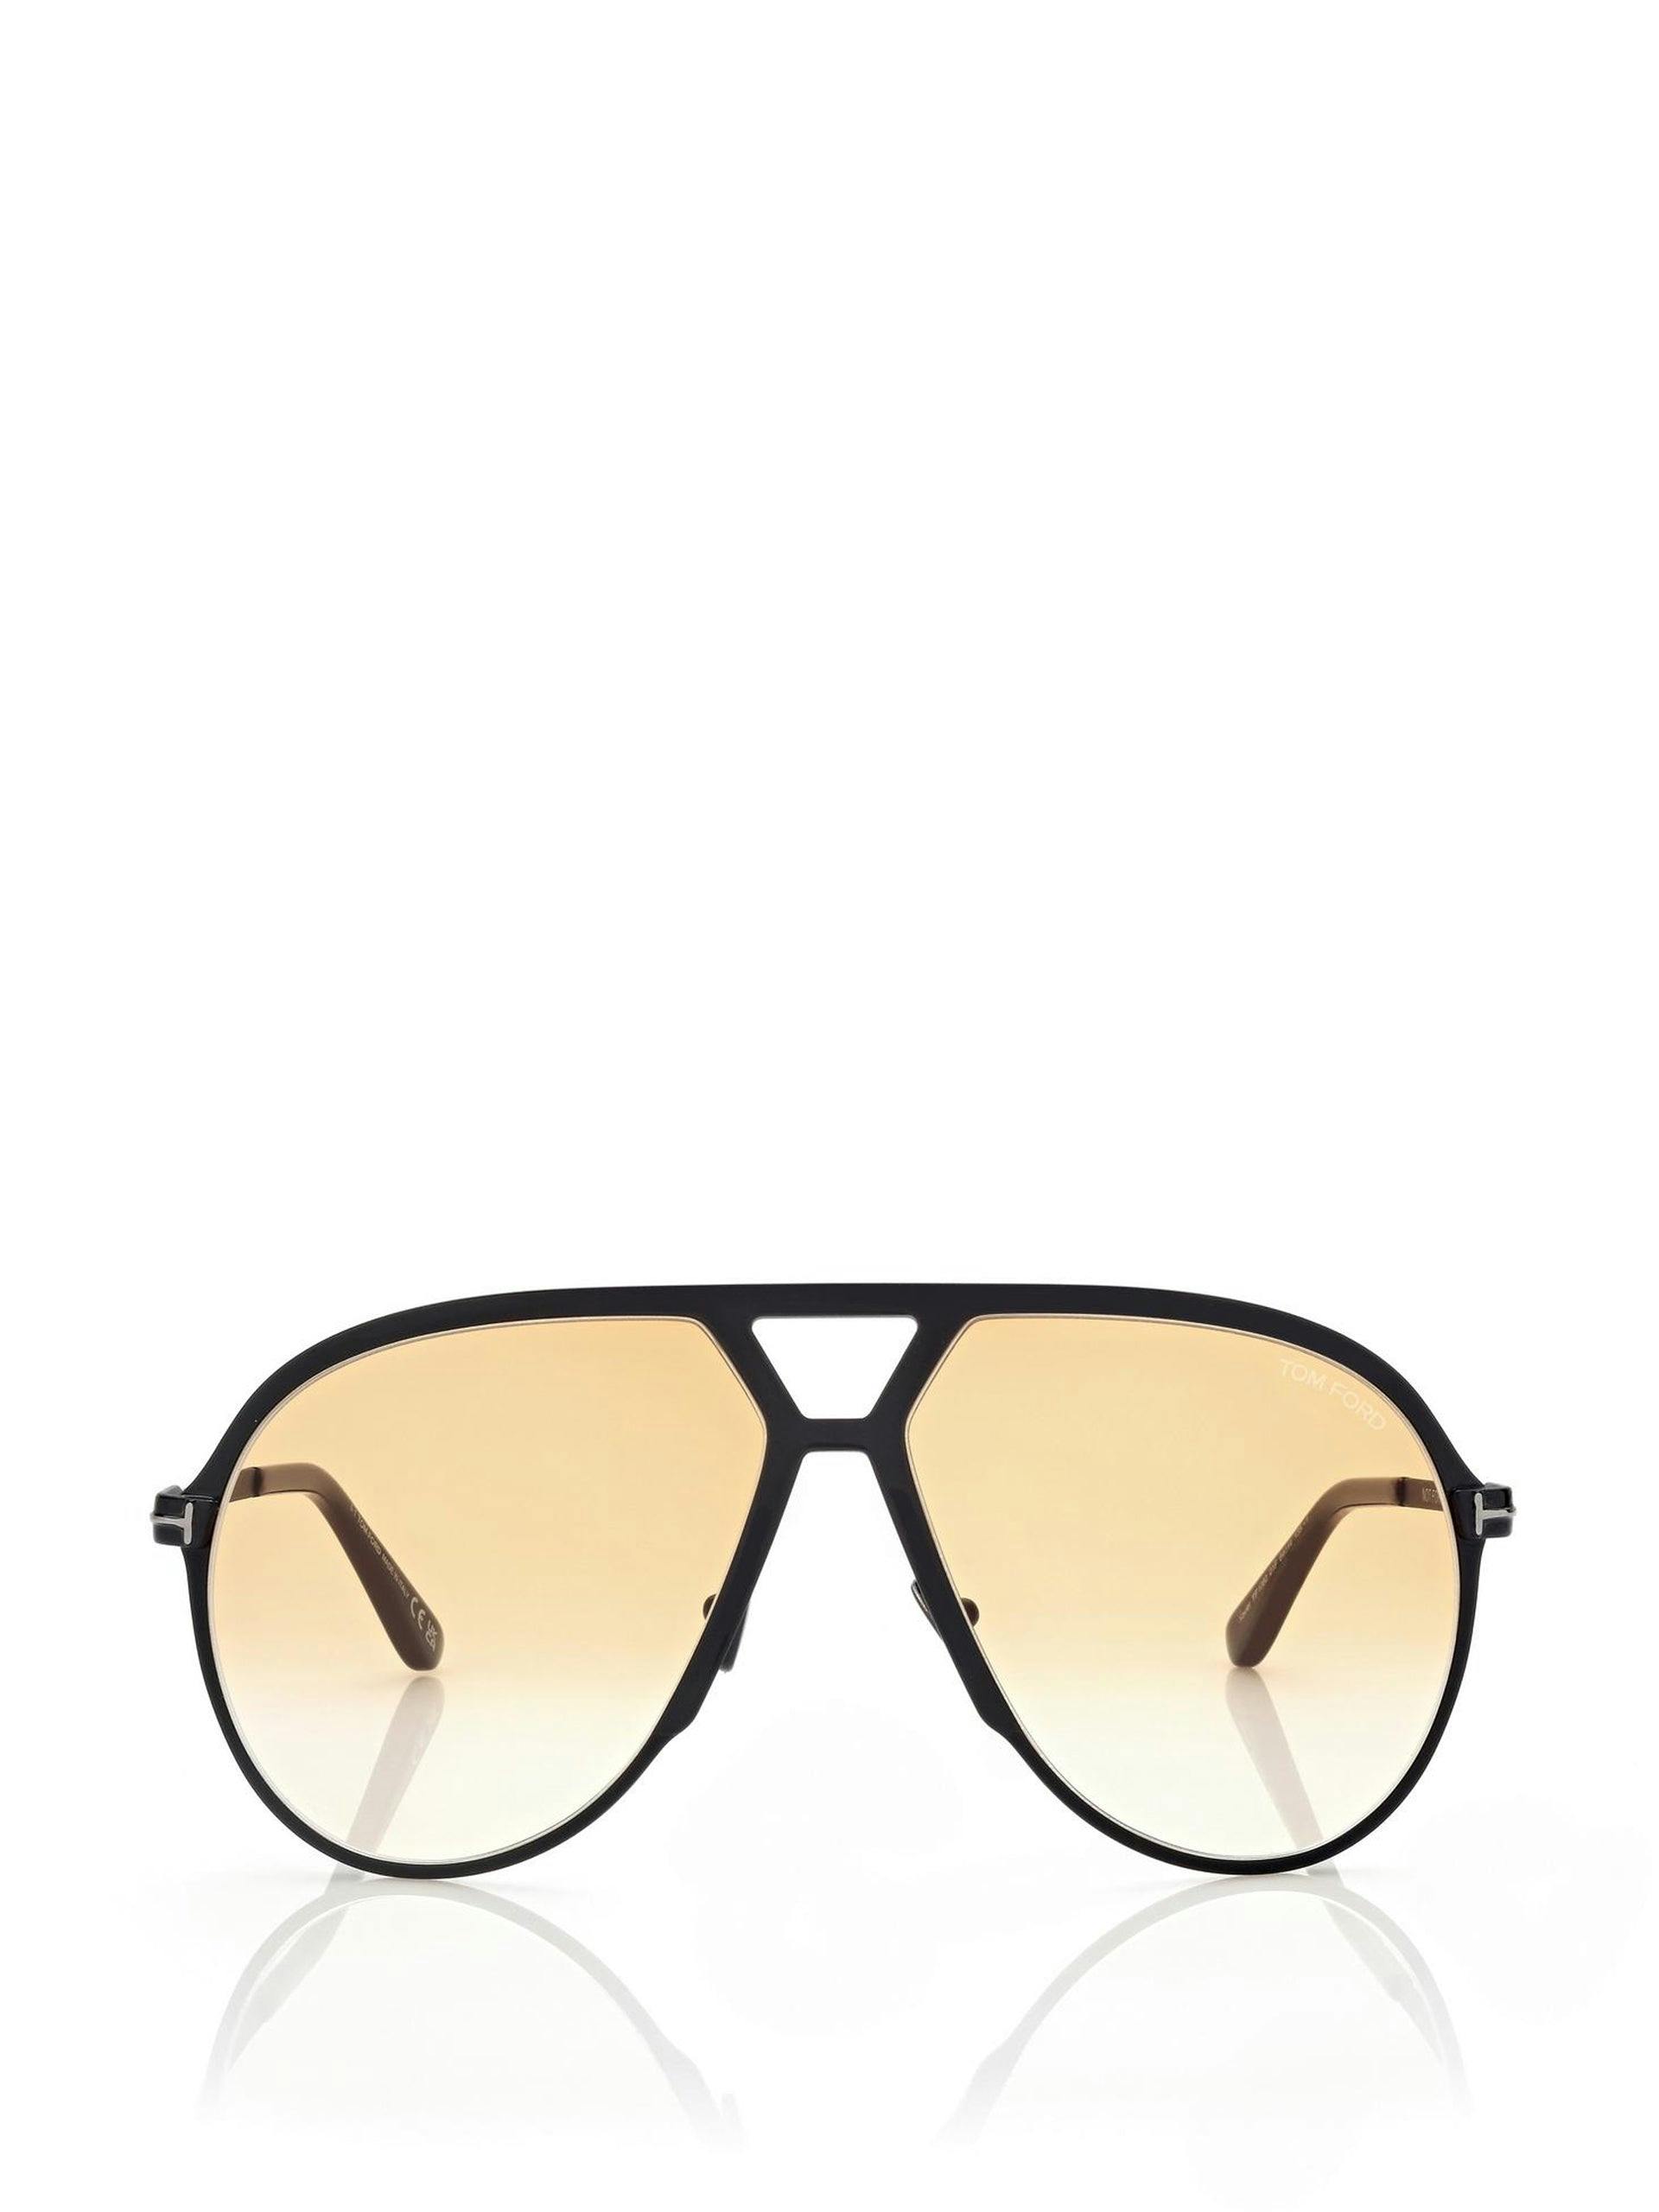 Xavier sunglasses